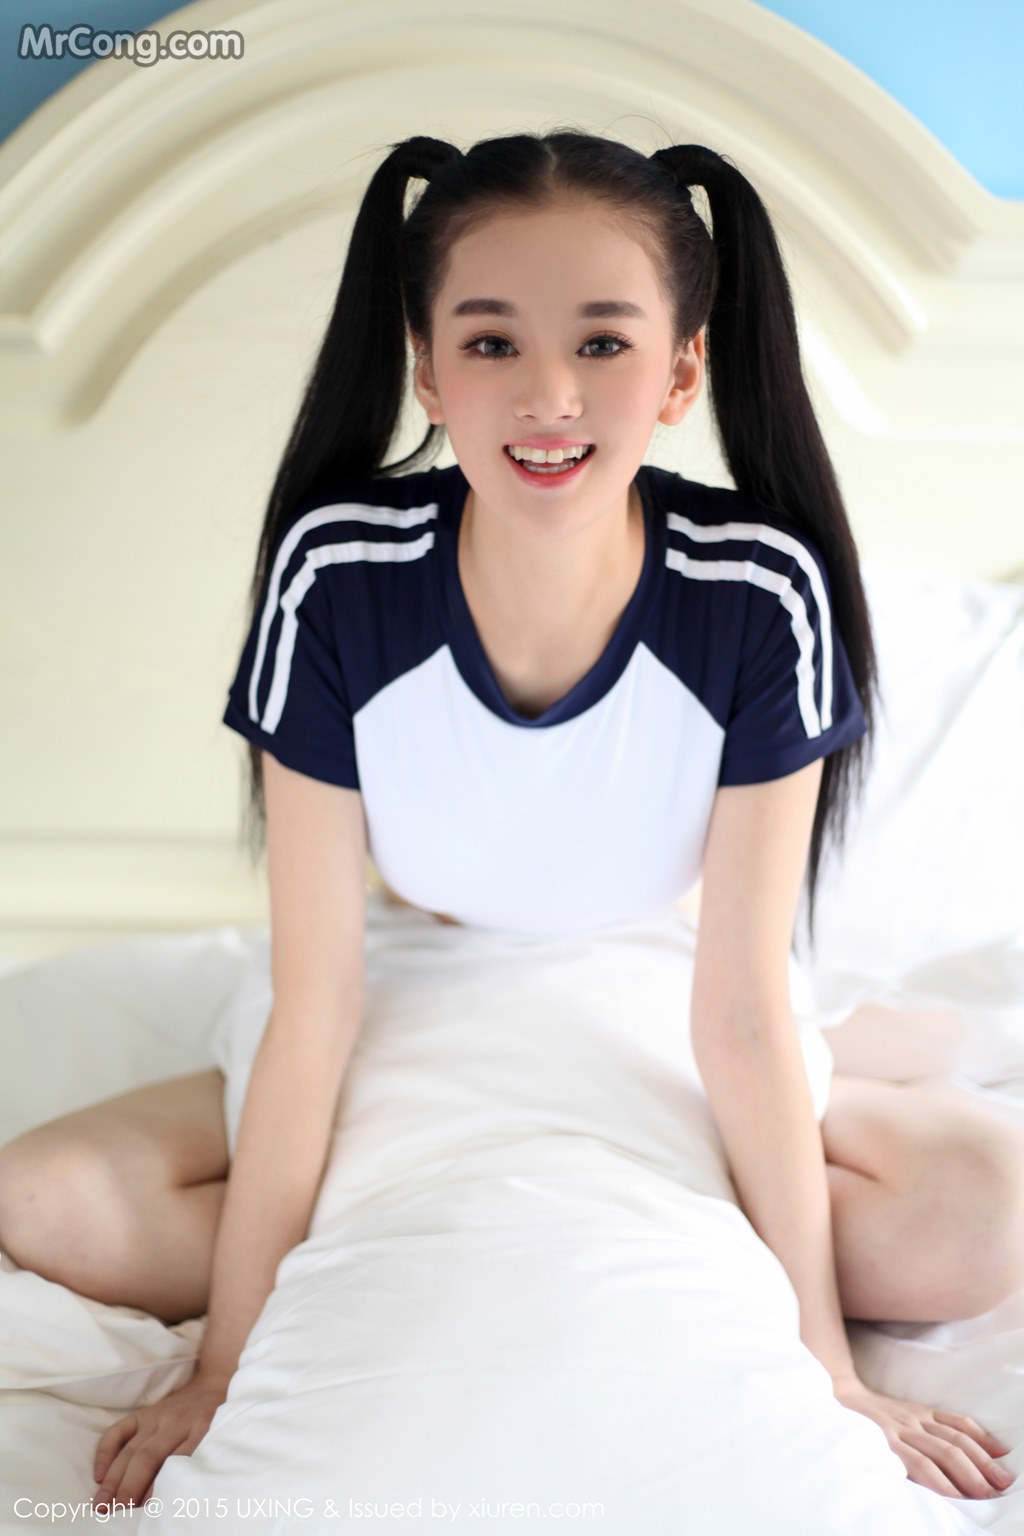 UXING Vol.027: Model Wen Xin Baby (温馨 baby) (45 pictures) photo 1-1